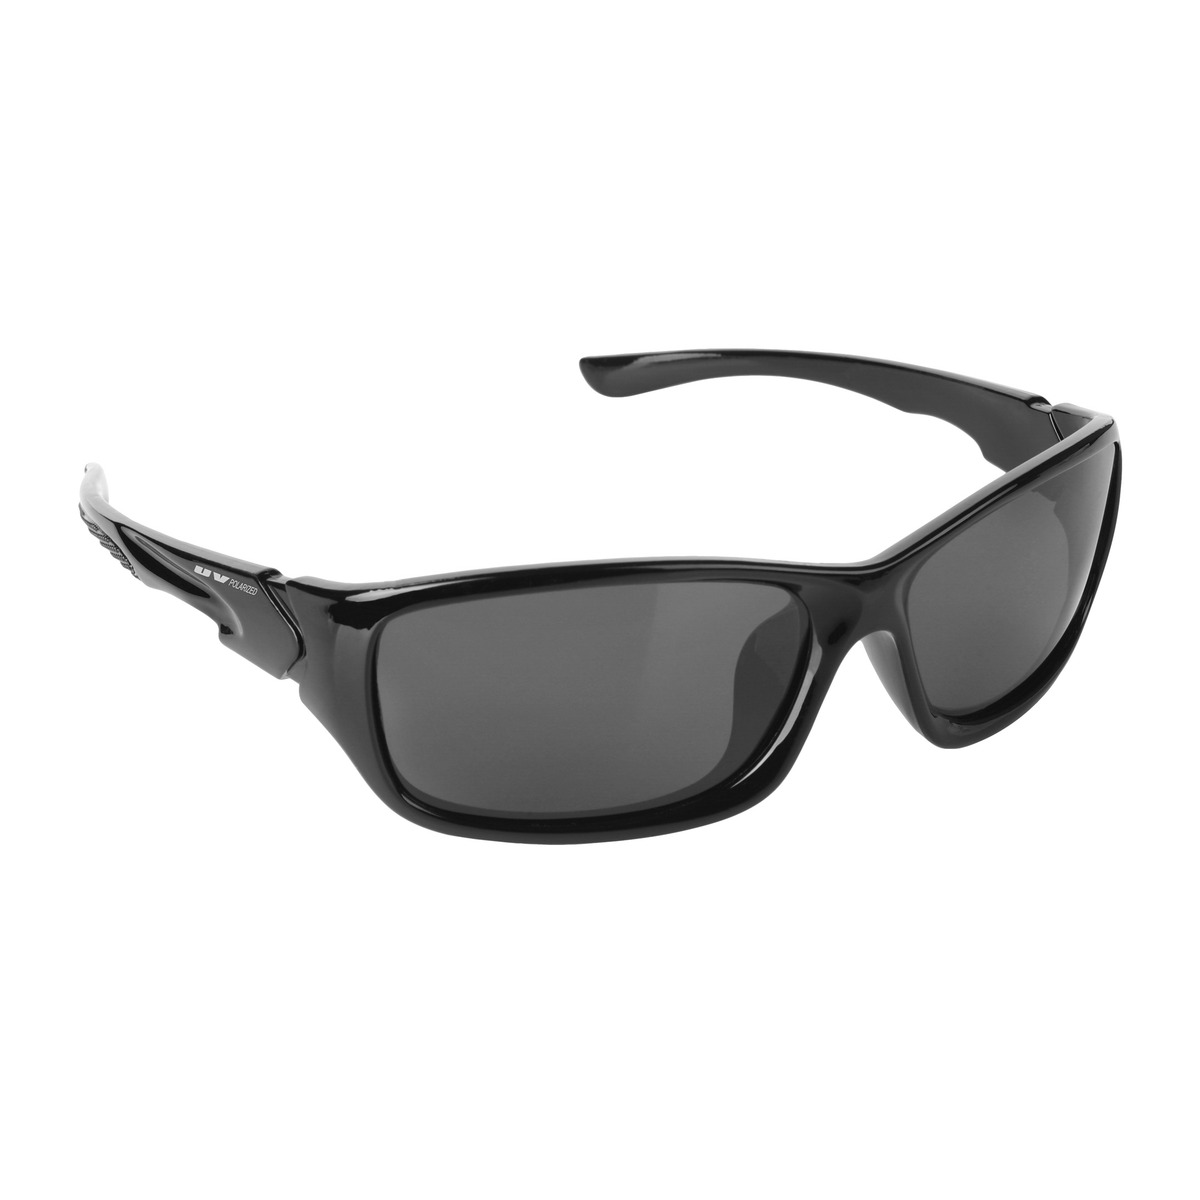 Mikado Sunglasses Polarized - 82227 GREY